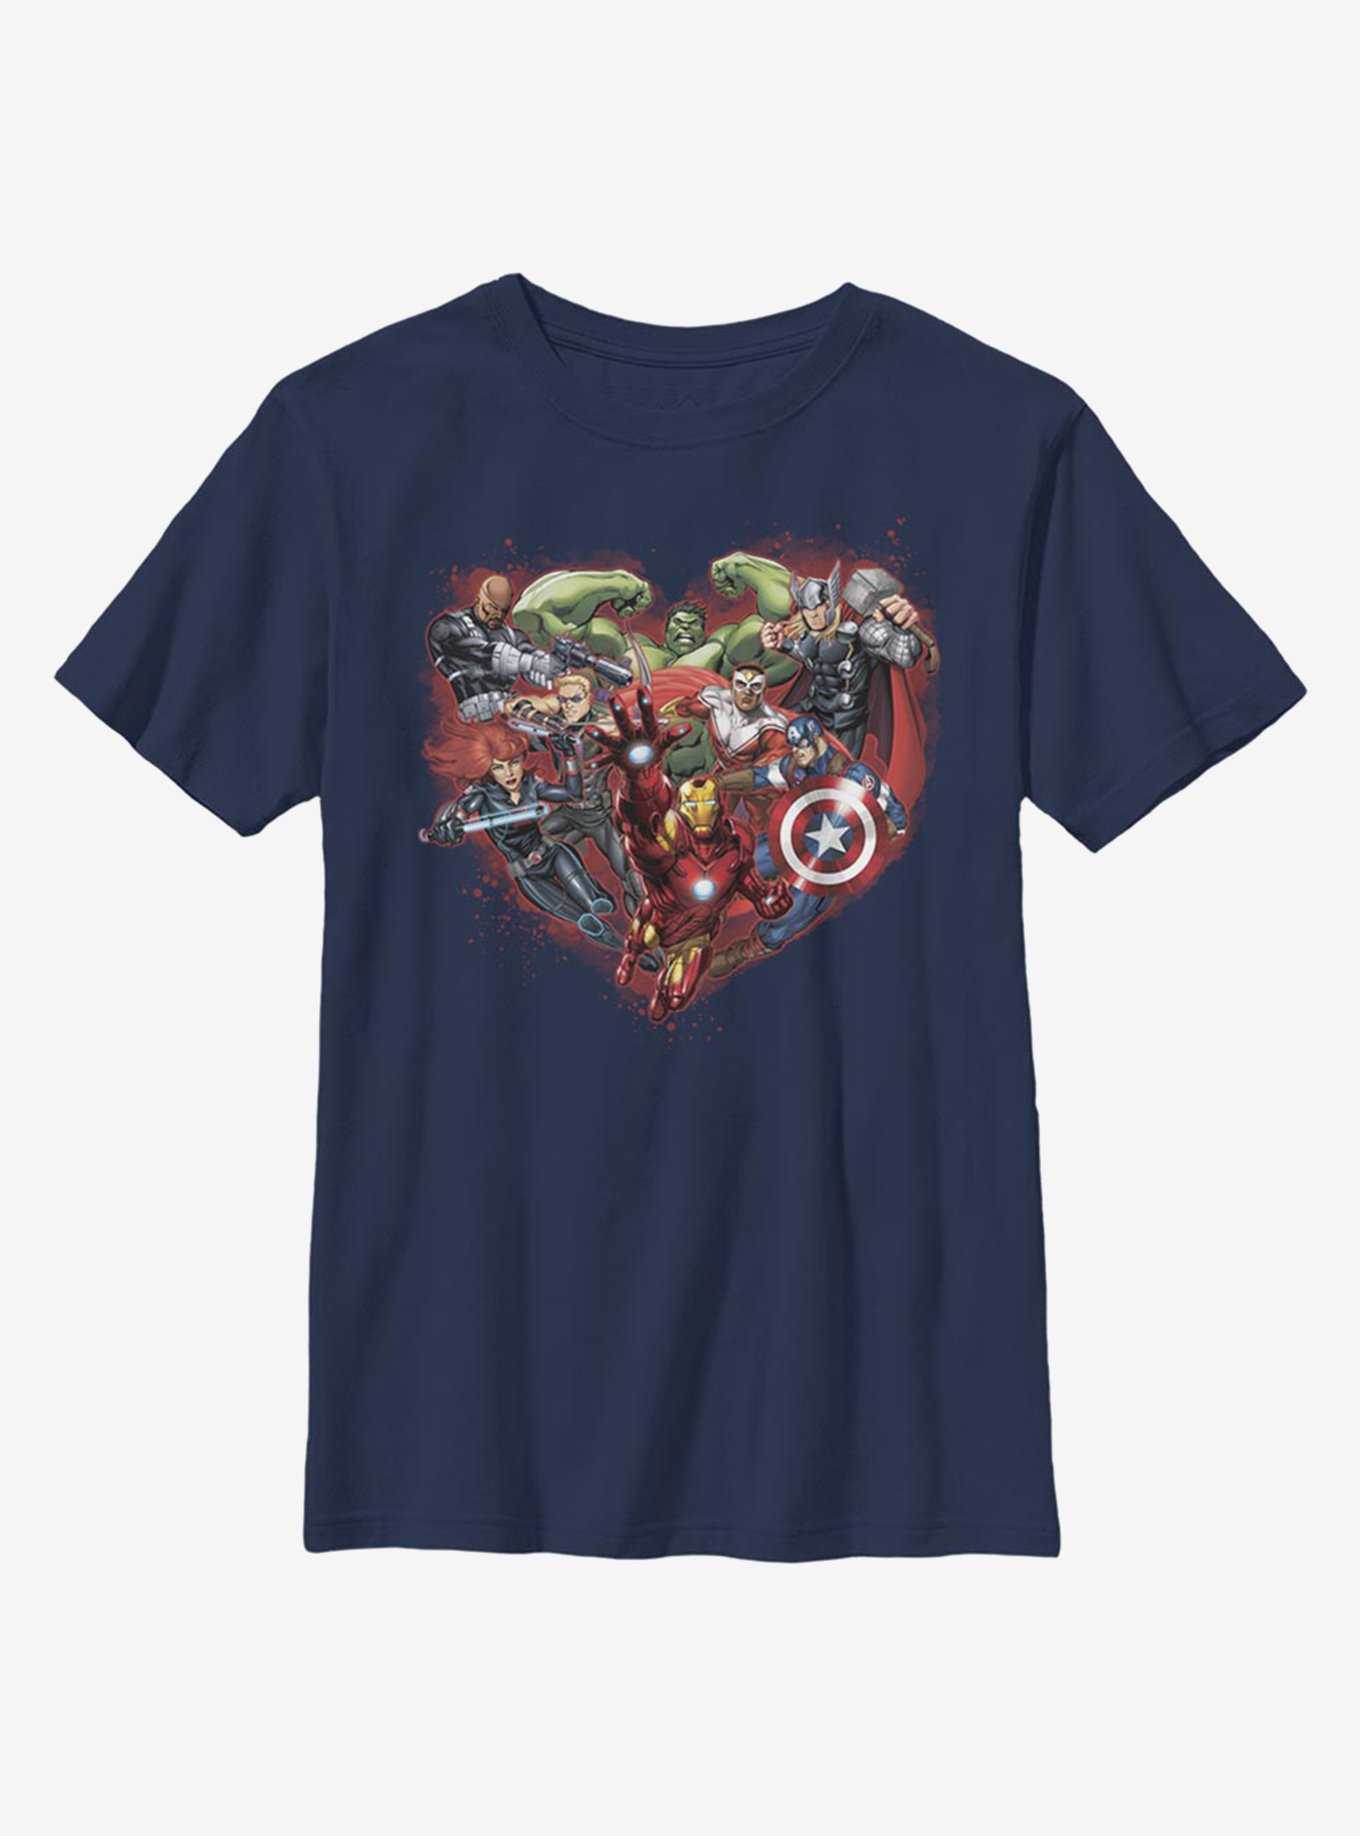 Merchandise | Universe & Her Avengers Shirts OFFICIAL